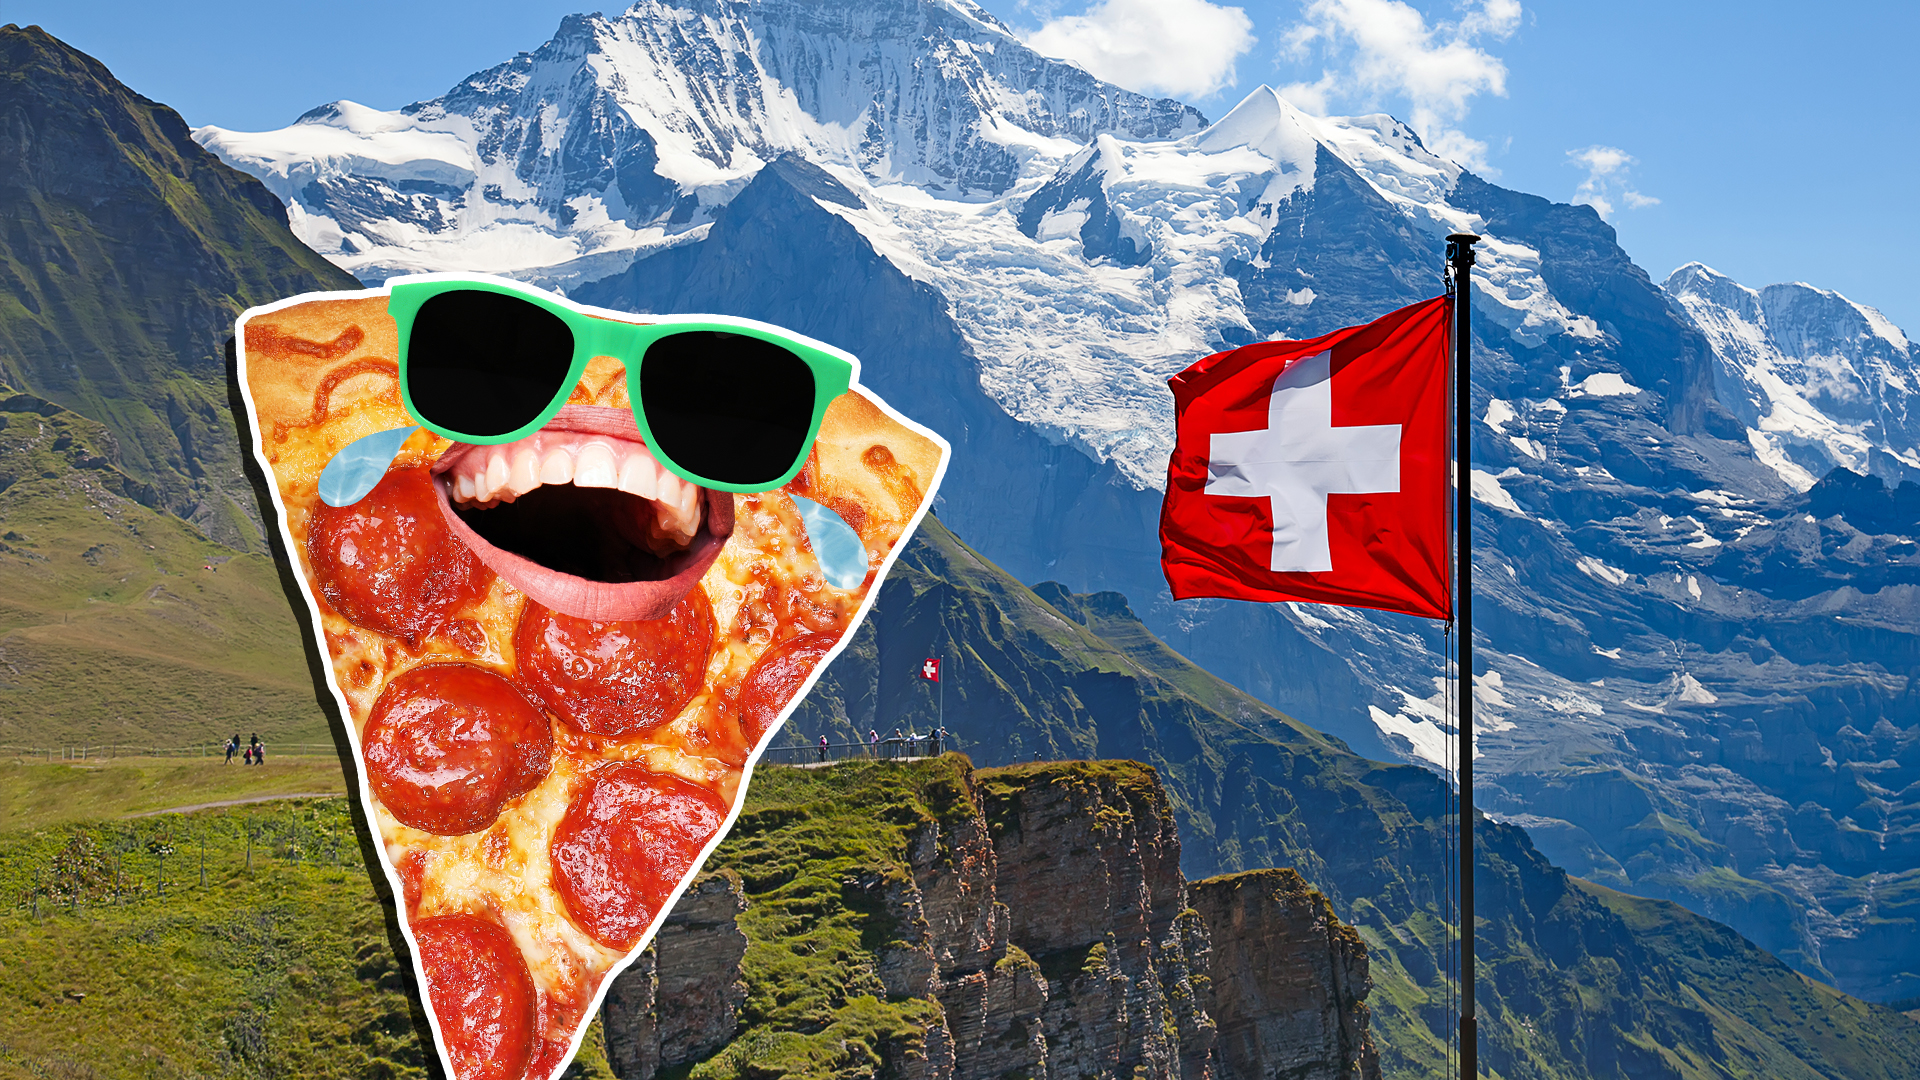 A pizza in Switzerland